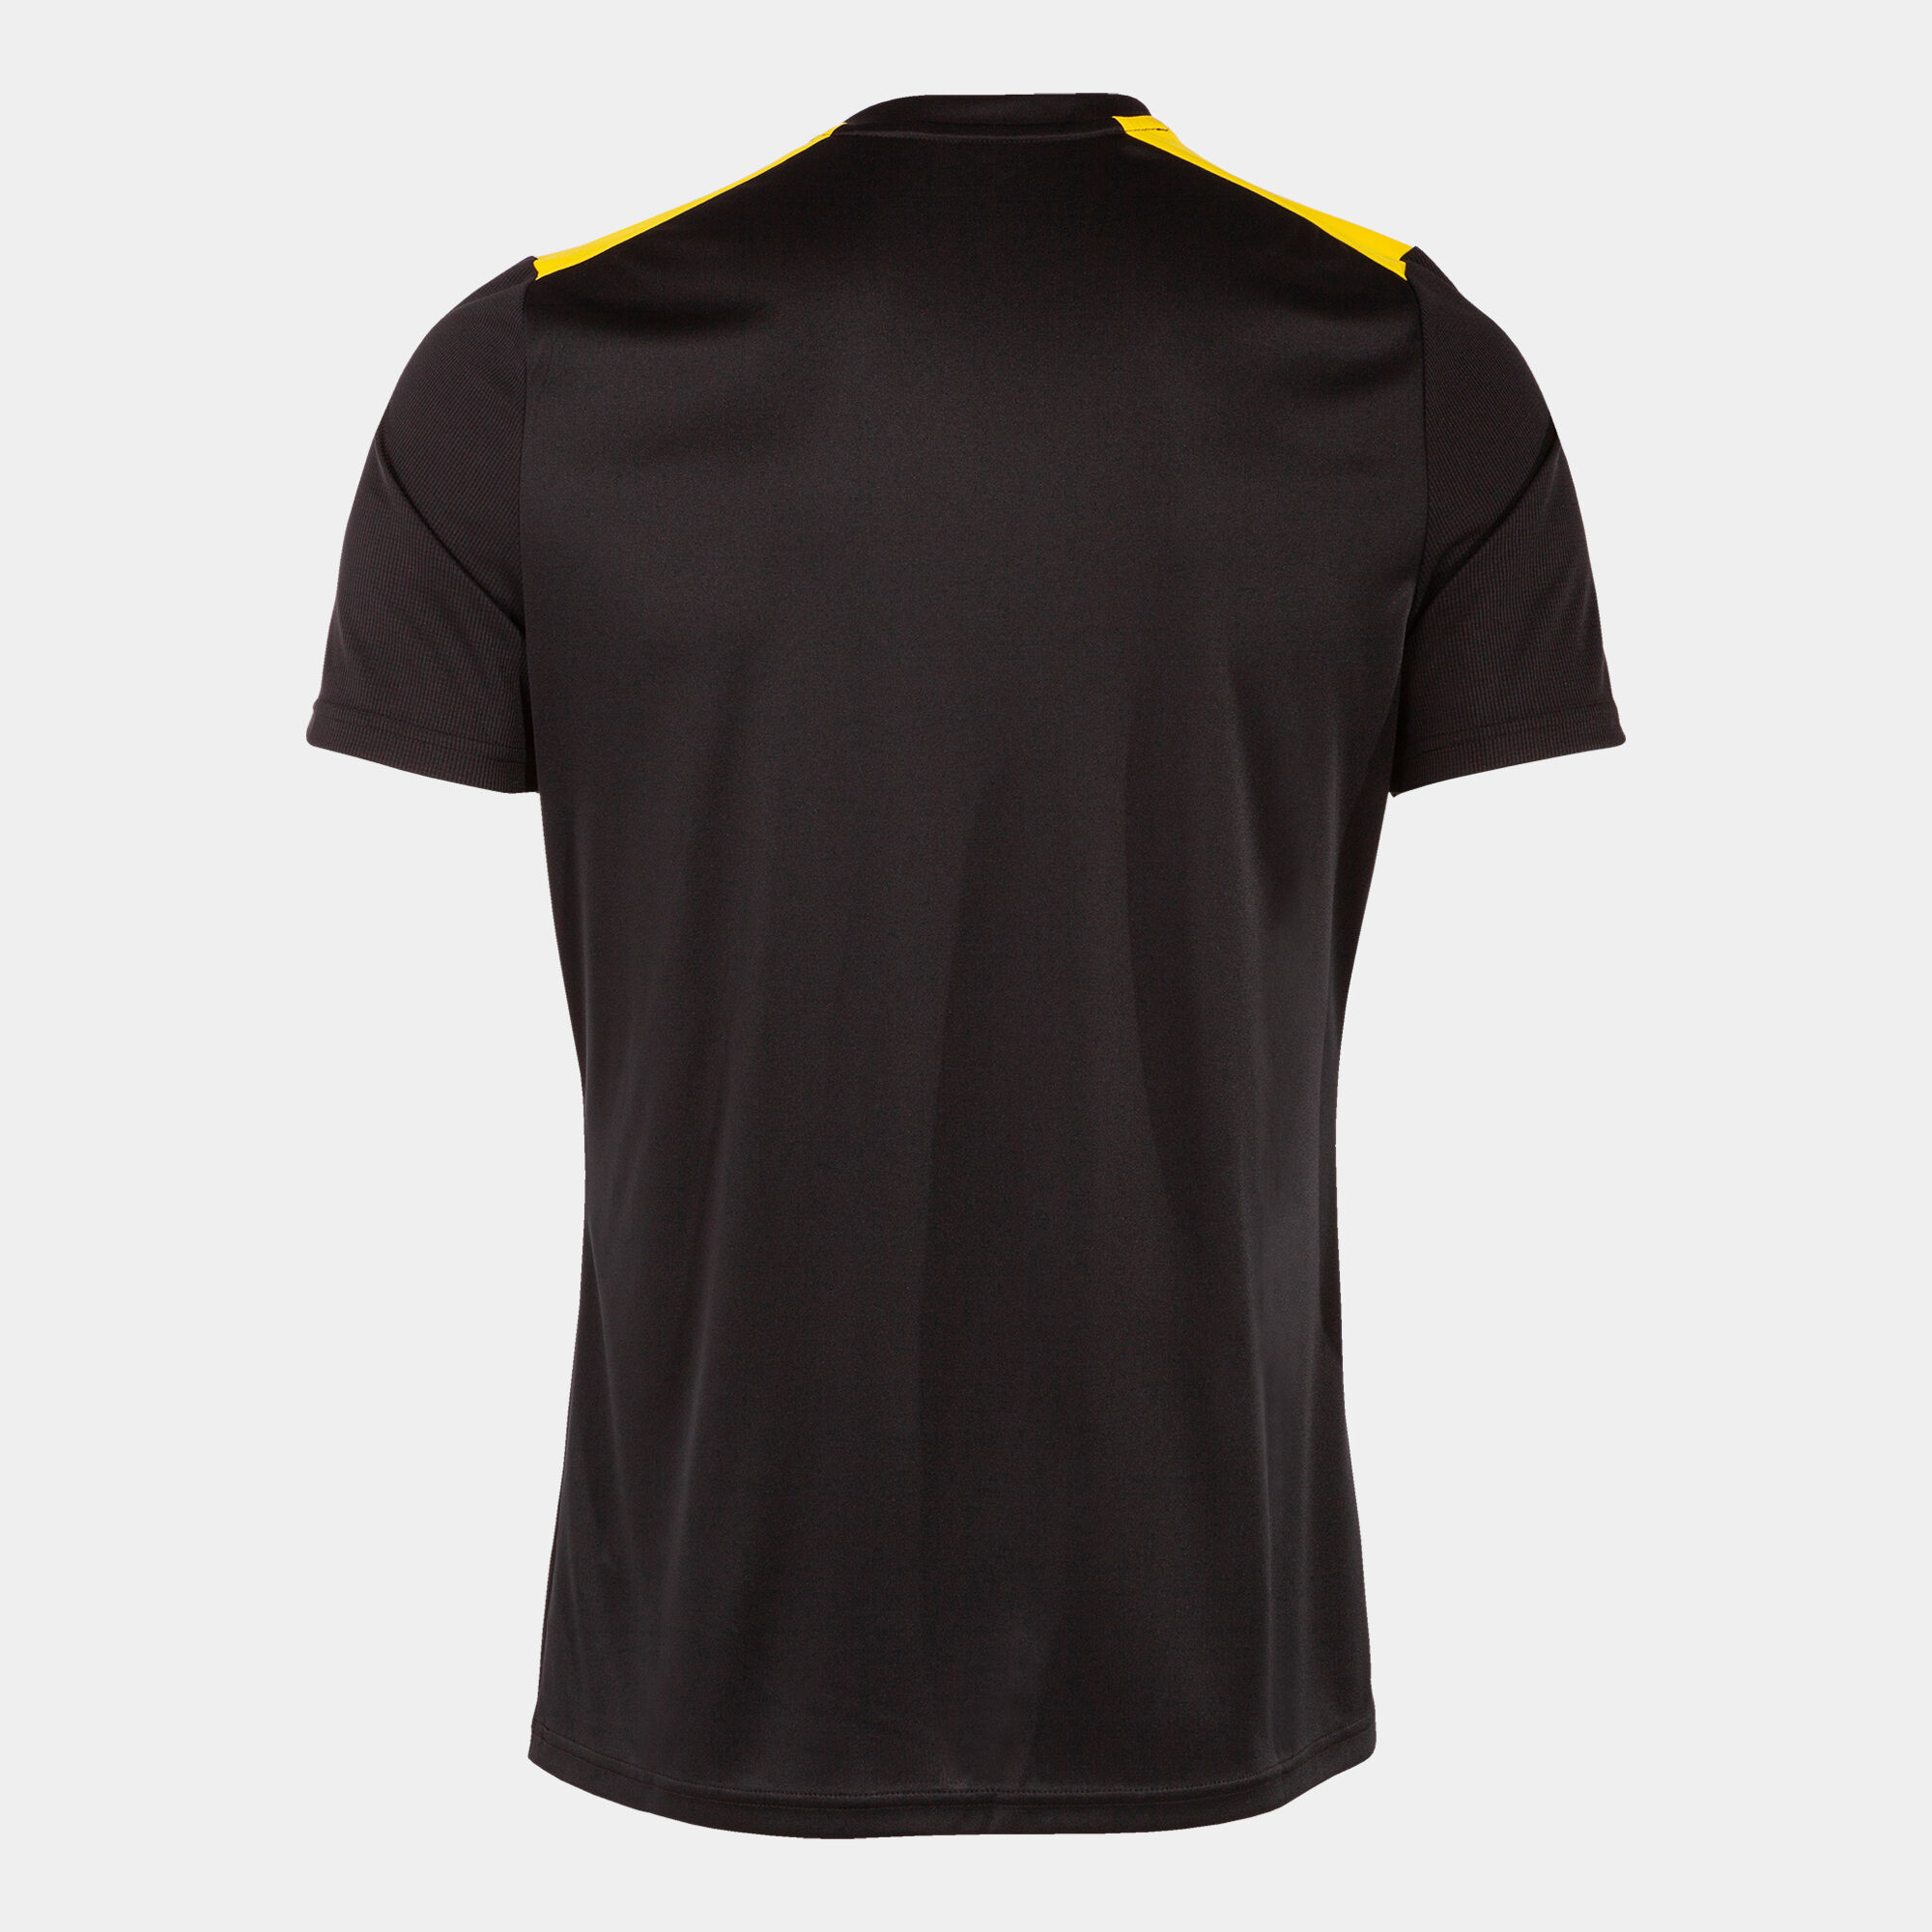 Camiseta manga corta hombre Championship VII negro amarillo